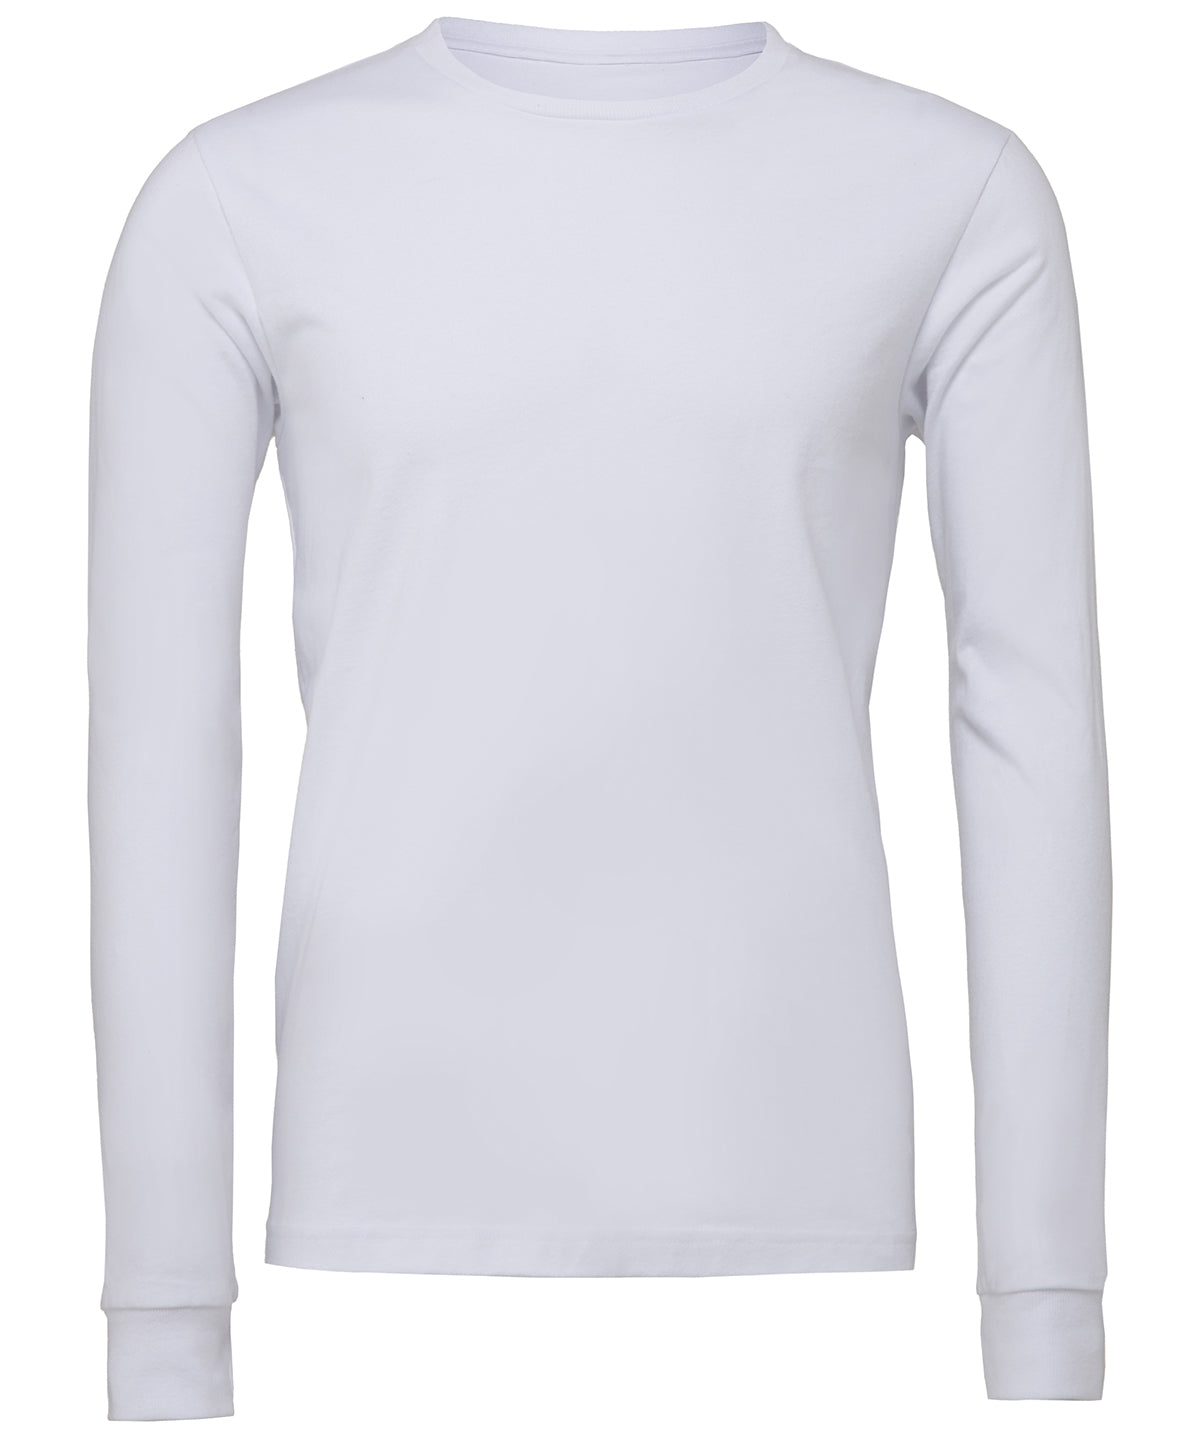 Personalised T-Shirts - Black Bella Canvas Unisex Jersey long sleeve tee